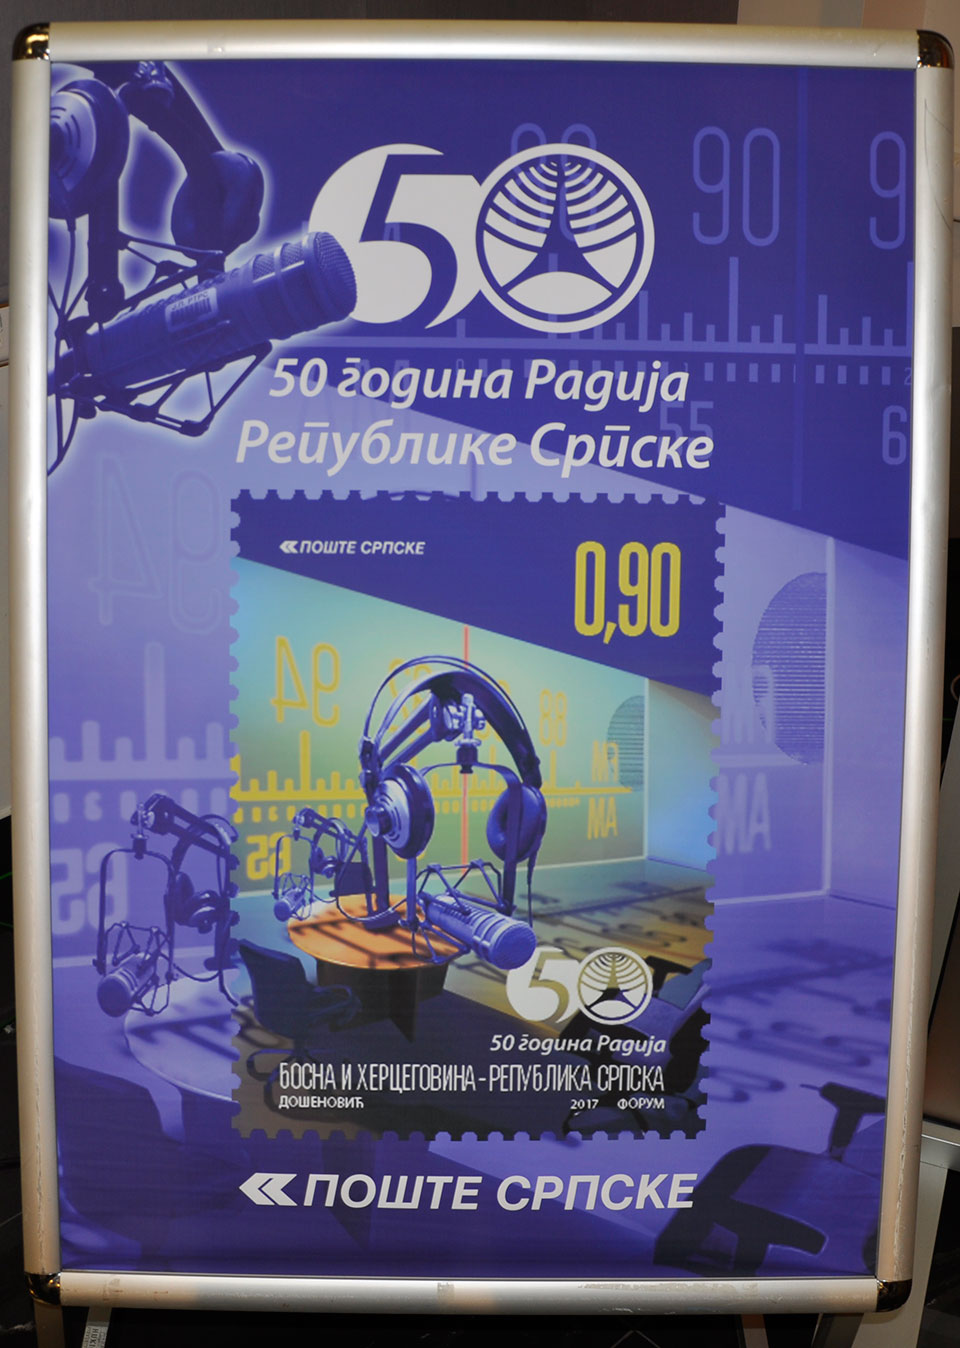 Promocija poštanske marke - 50 godina Radija Republike Srpske